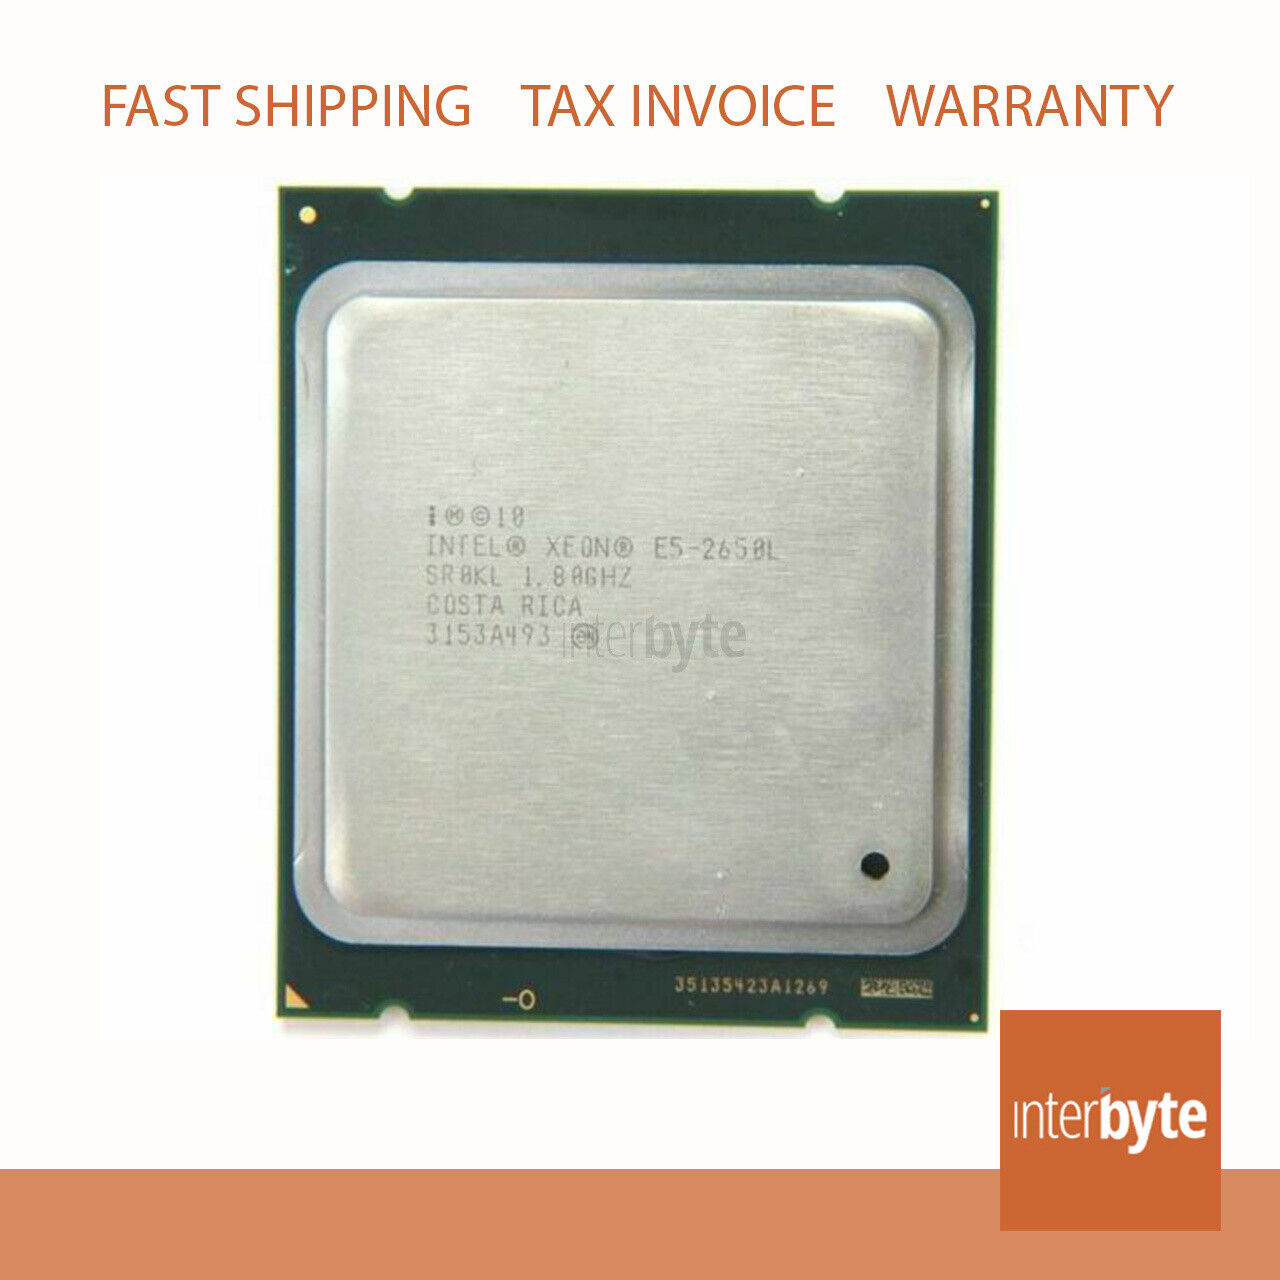 INTEL CPU E5-2650L 8C 1.8GHZ 6.4 20M SR0KL 9 CORE PROCESSOR